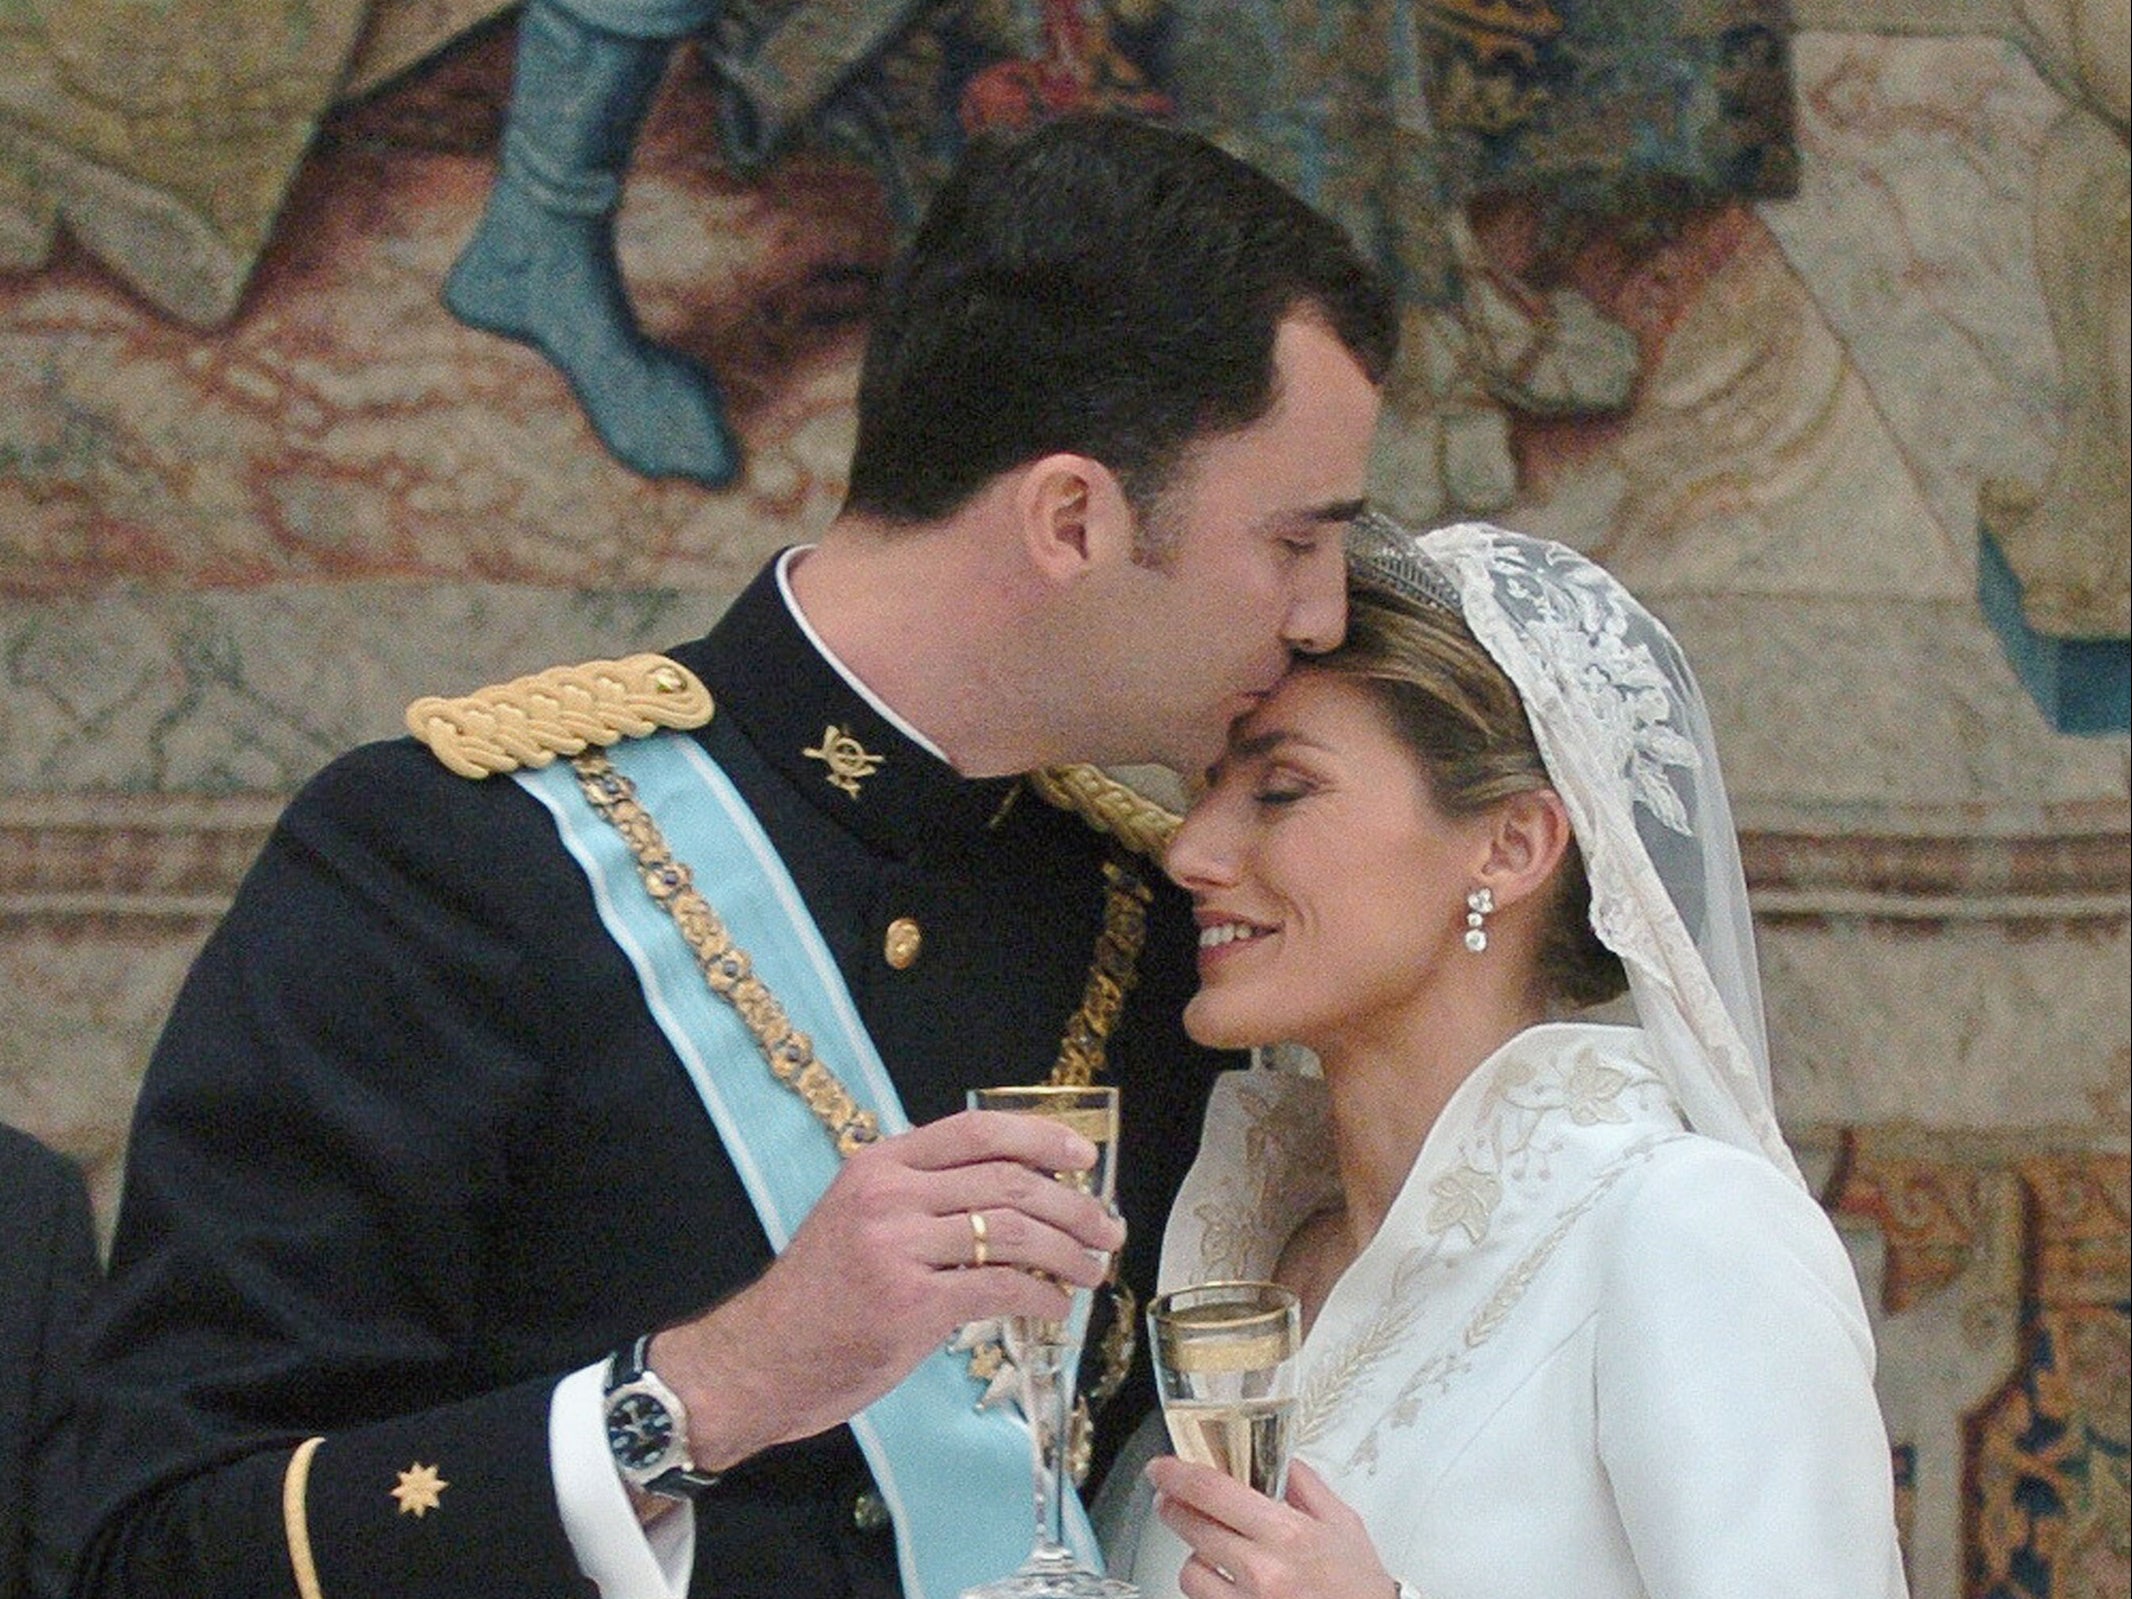 Letizia and Felipe tied the knot in a lavish ceremony in 2004